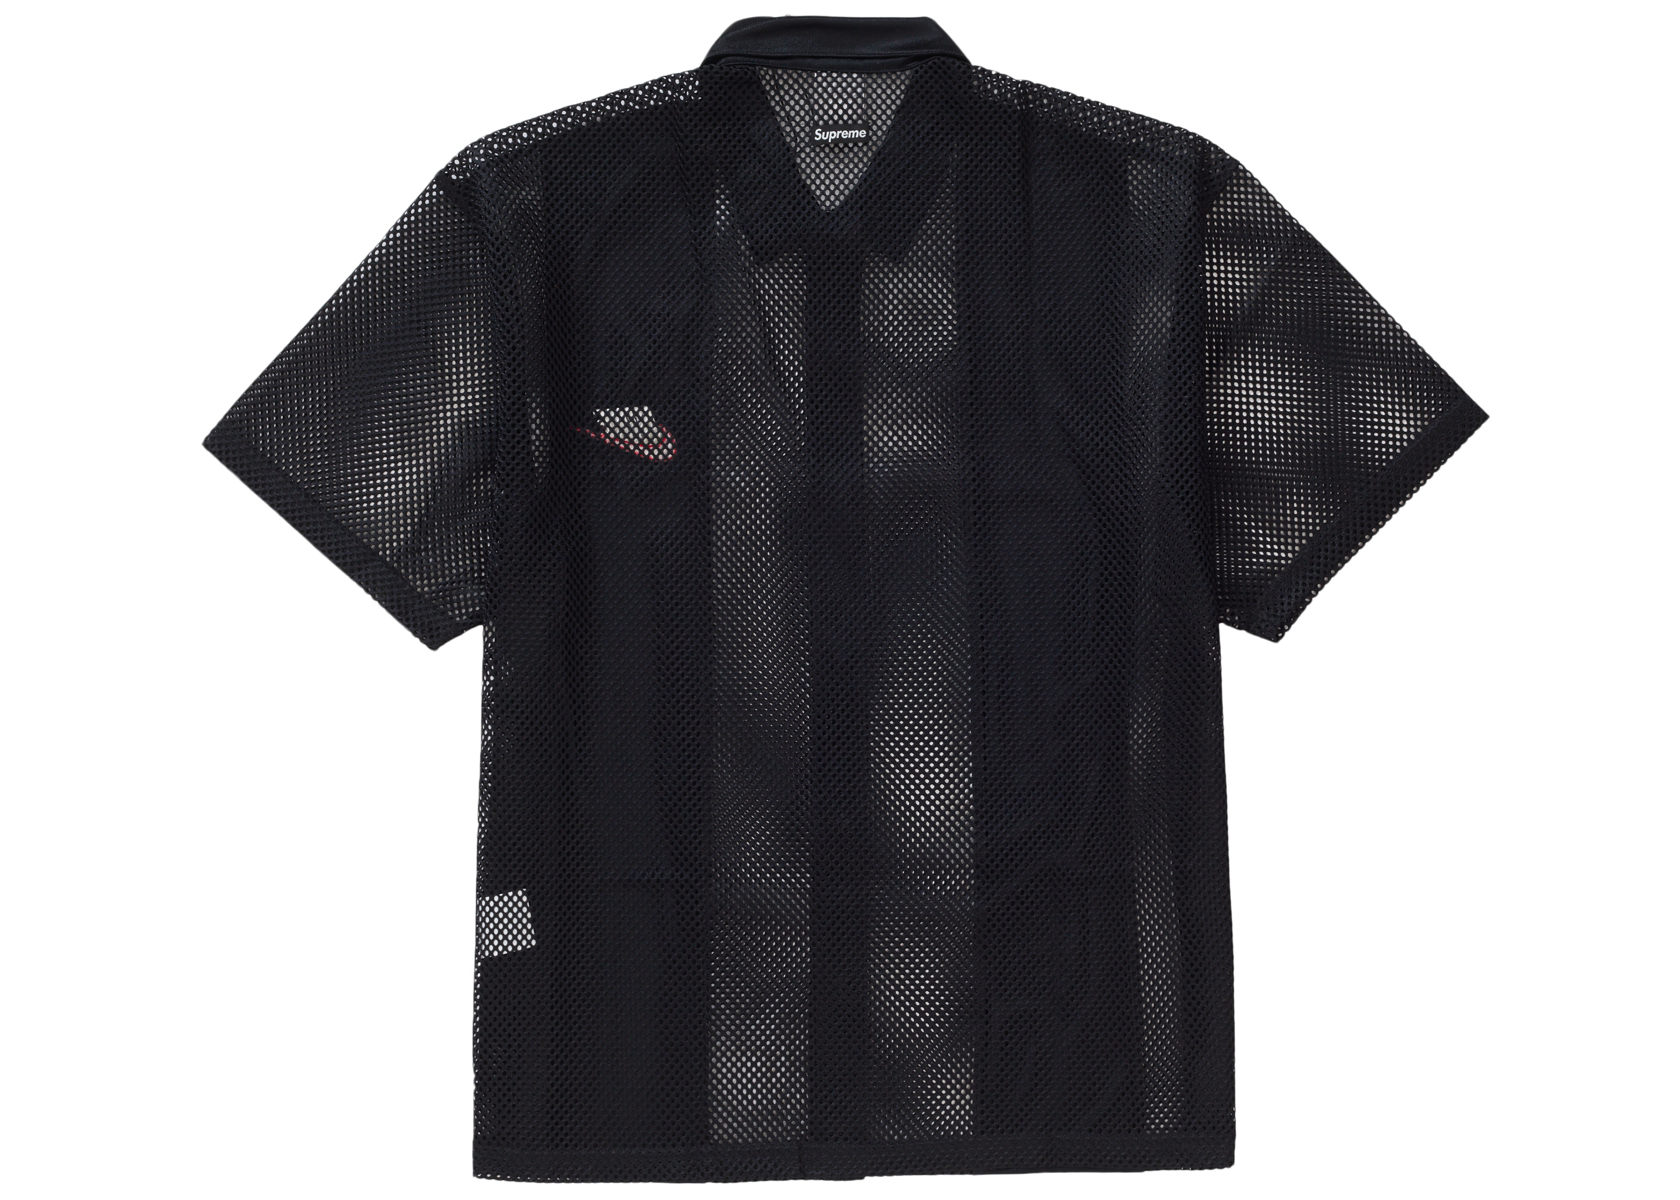 Supreme Nike Mesh S/S Shirt Black